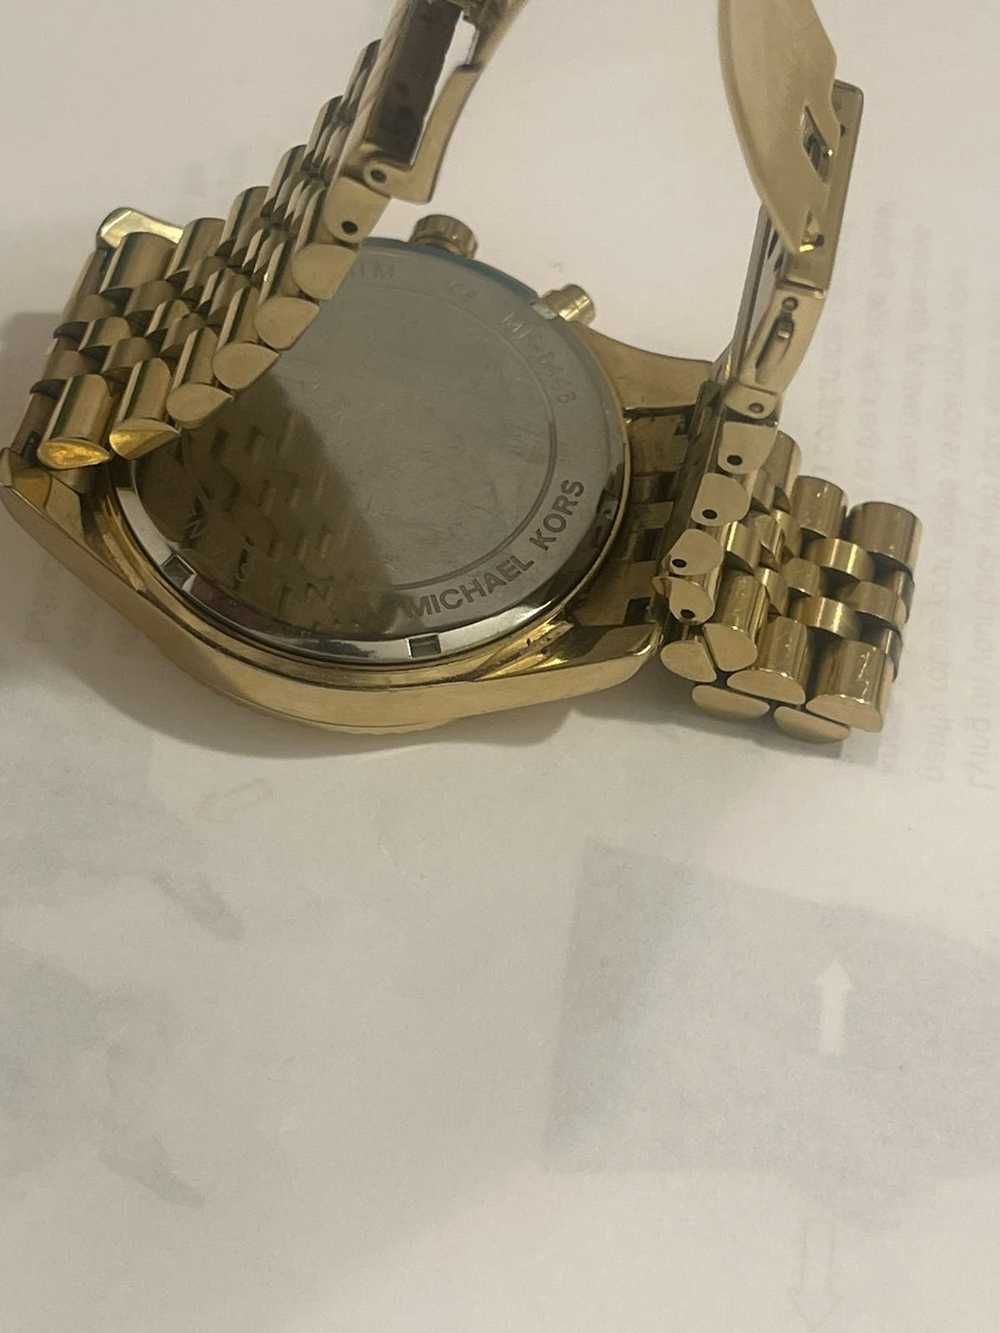 Michael Kors Michael Kors Gold Watch - image 5